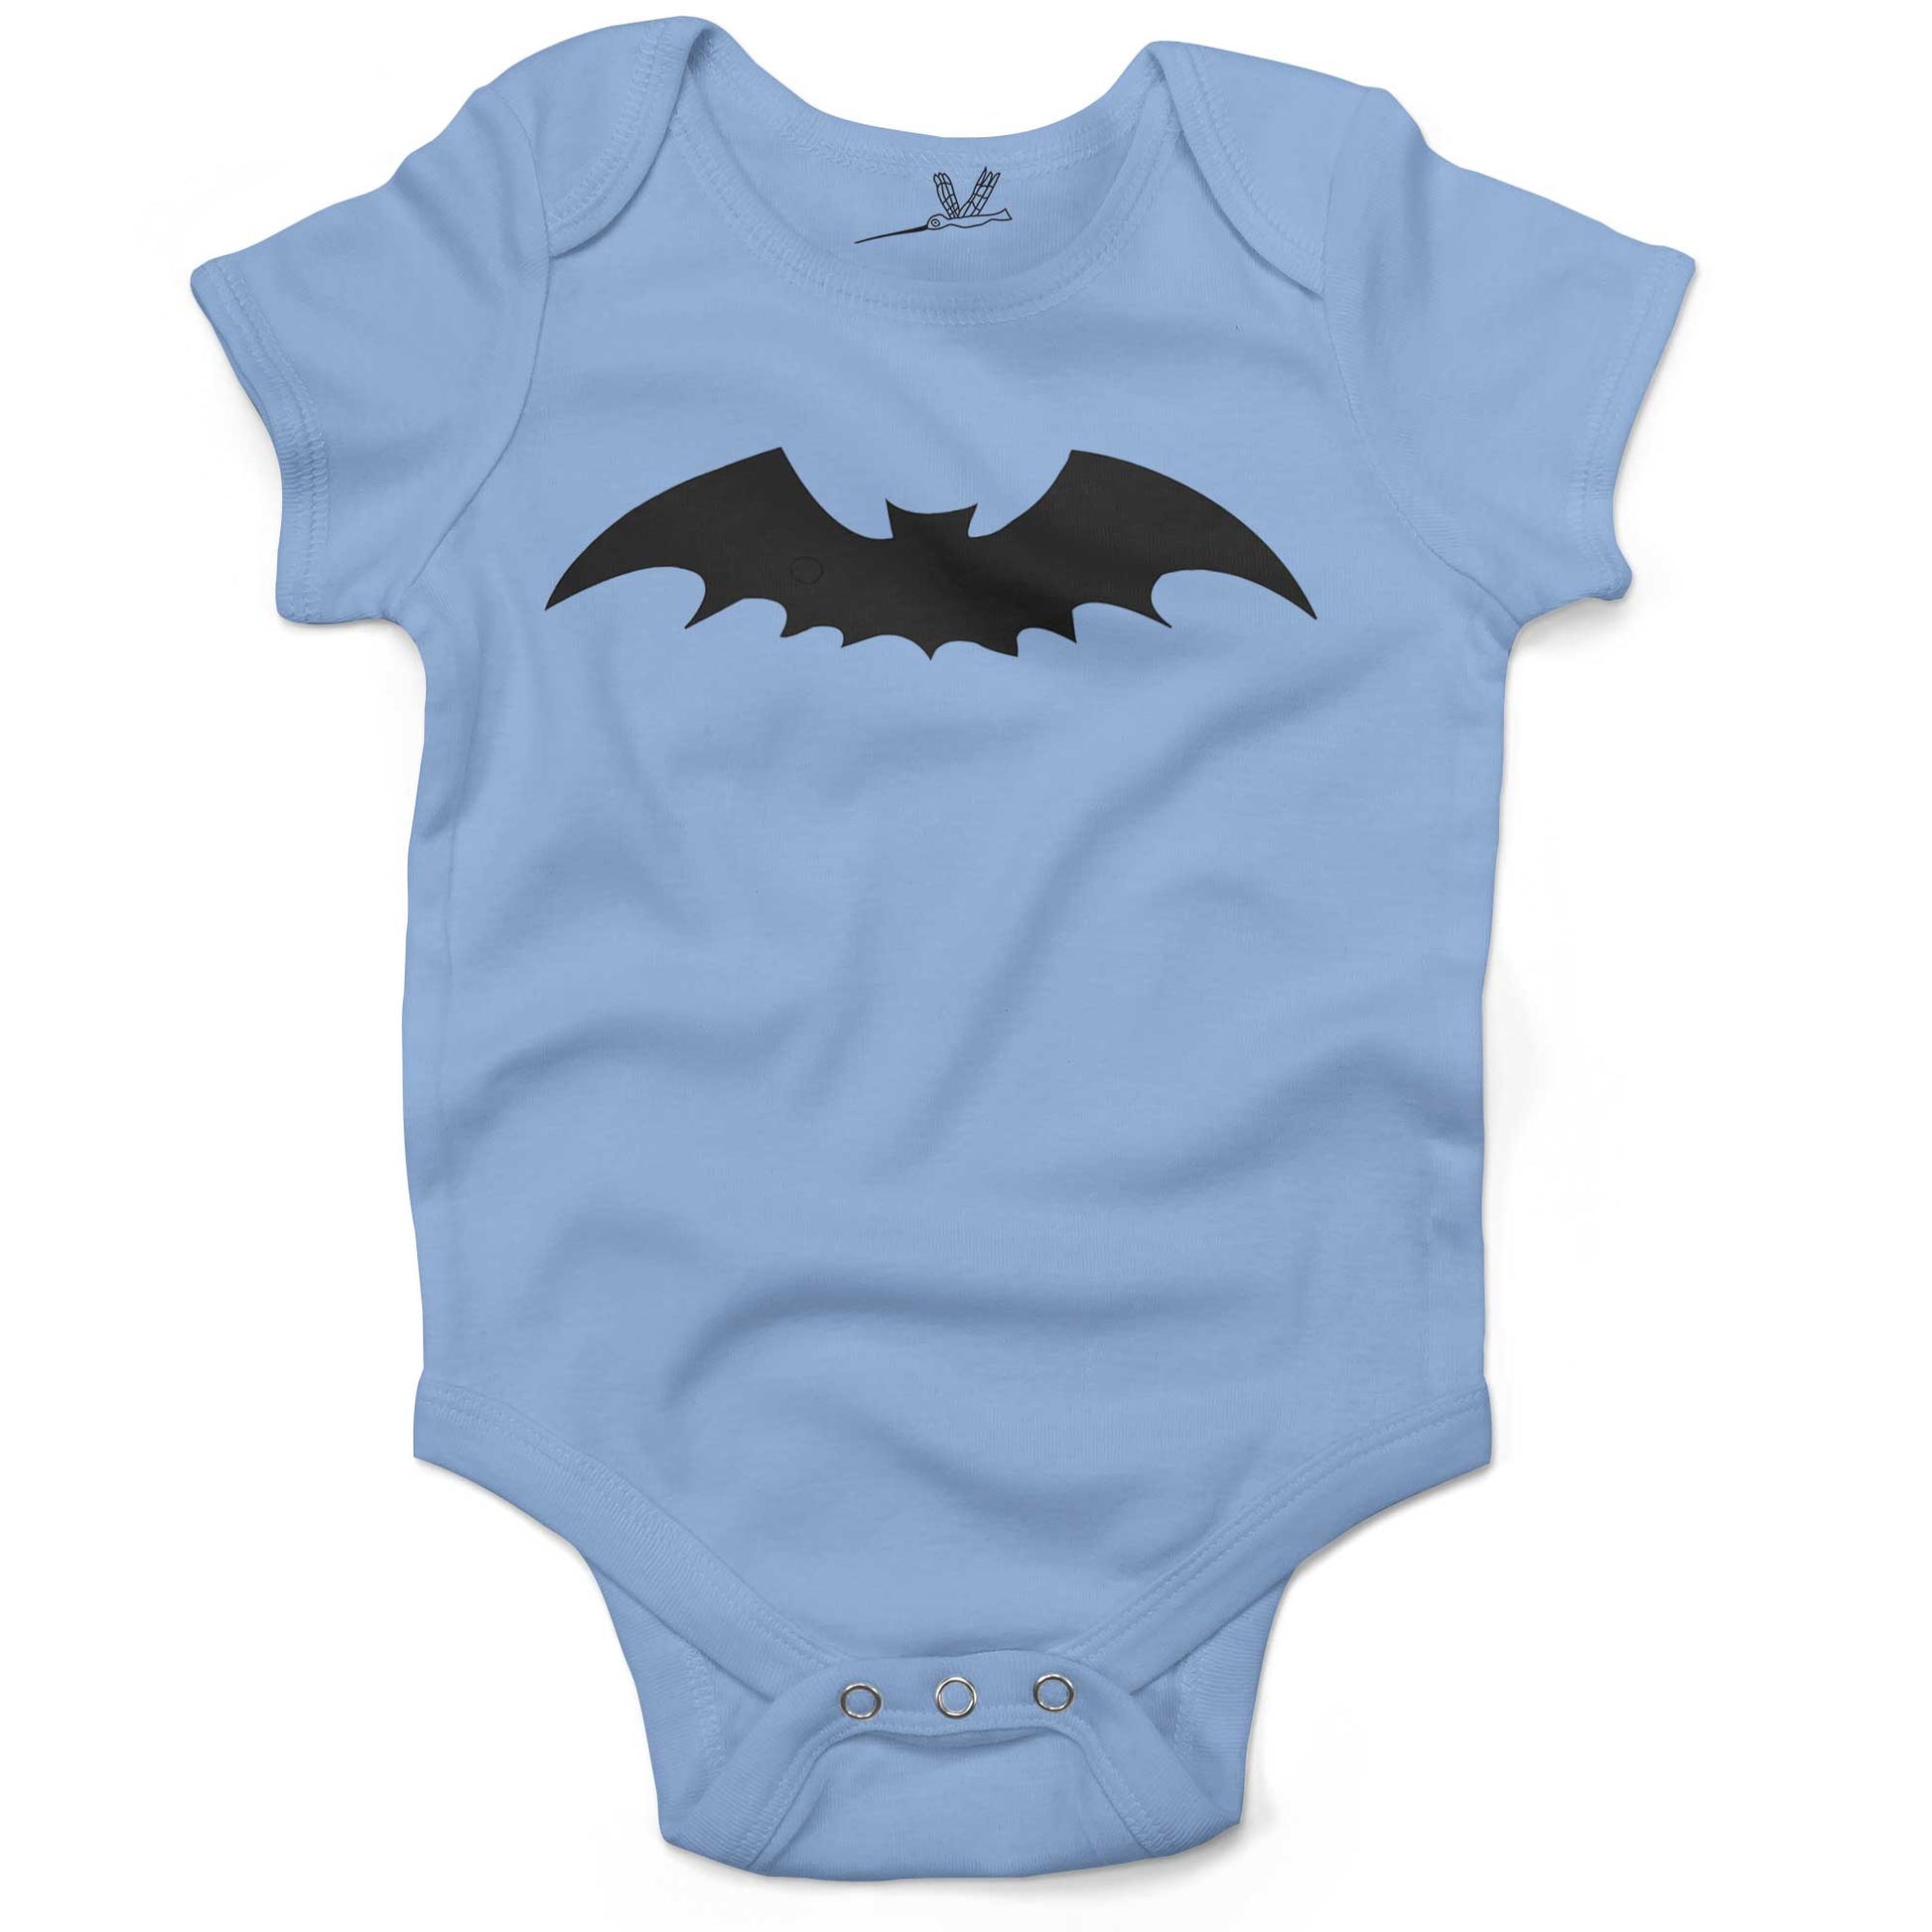 Gothic Bat Infant Bodysuit or Raglan Tee-Organic Baby Blue-3-6 months